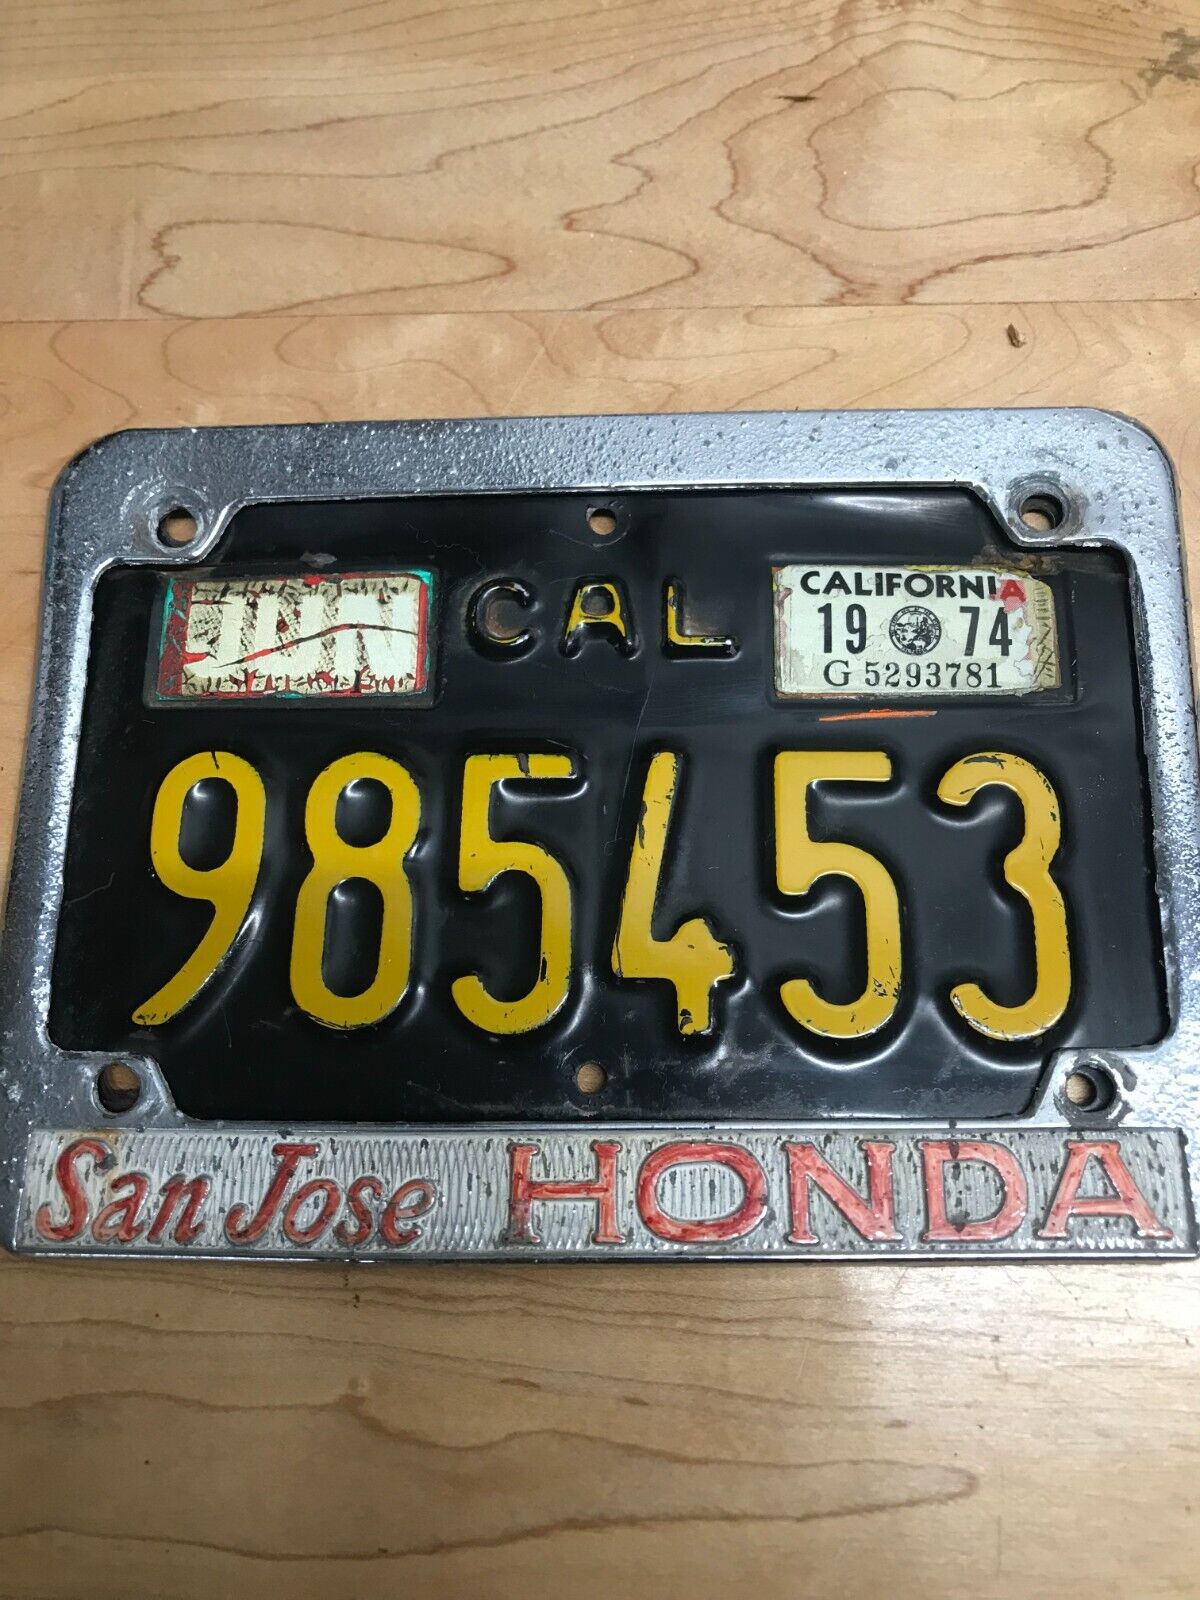 Vintage Honda motorcycle  license plate frame and plate San Jose California